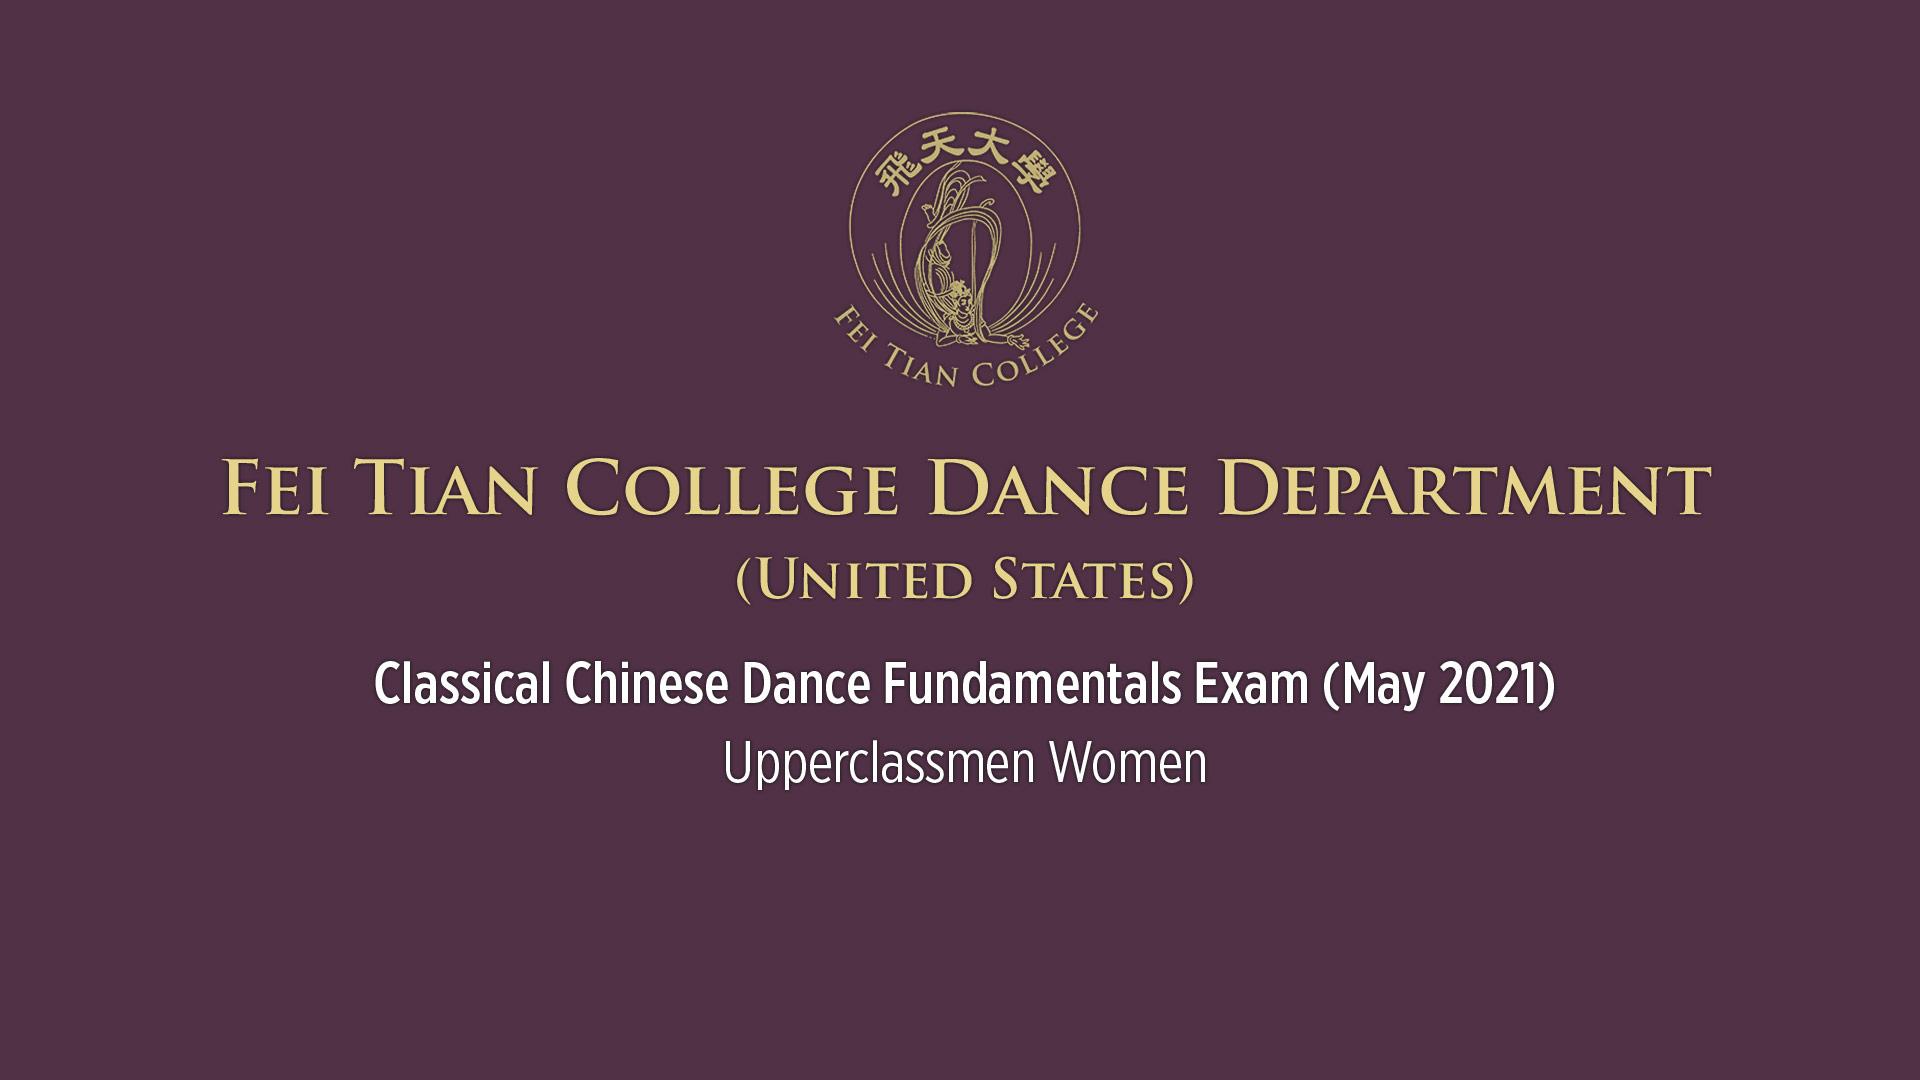 Fei Tian College Dance Department Classical Chinese Dance Fundamentals Exam, Upperclassmen Female, May 2021